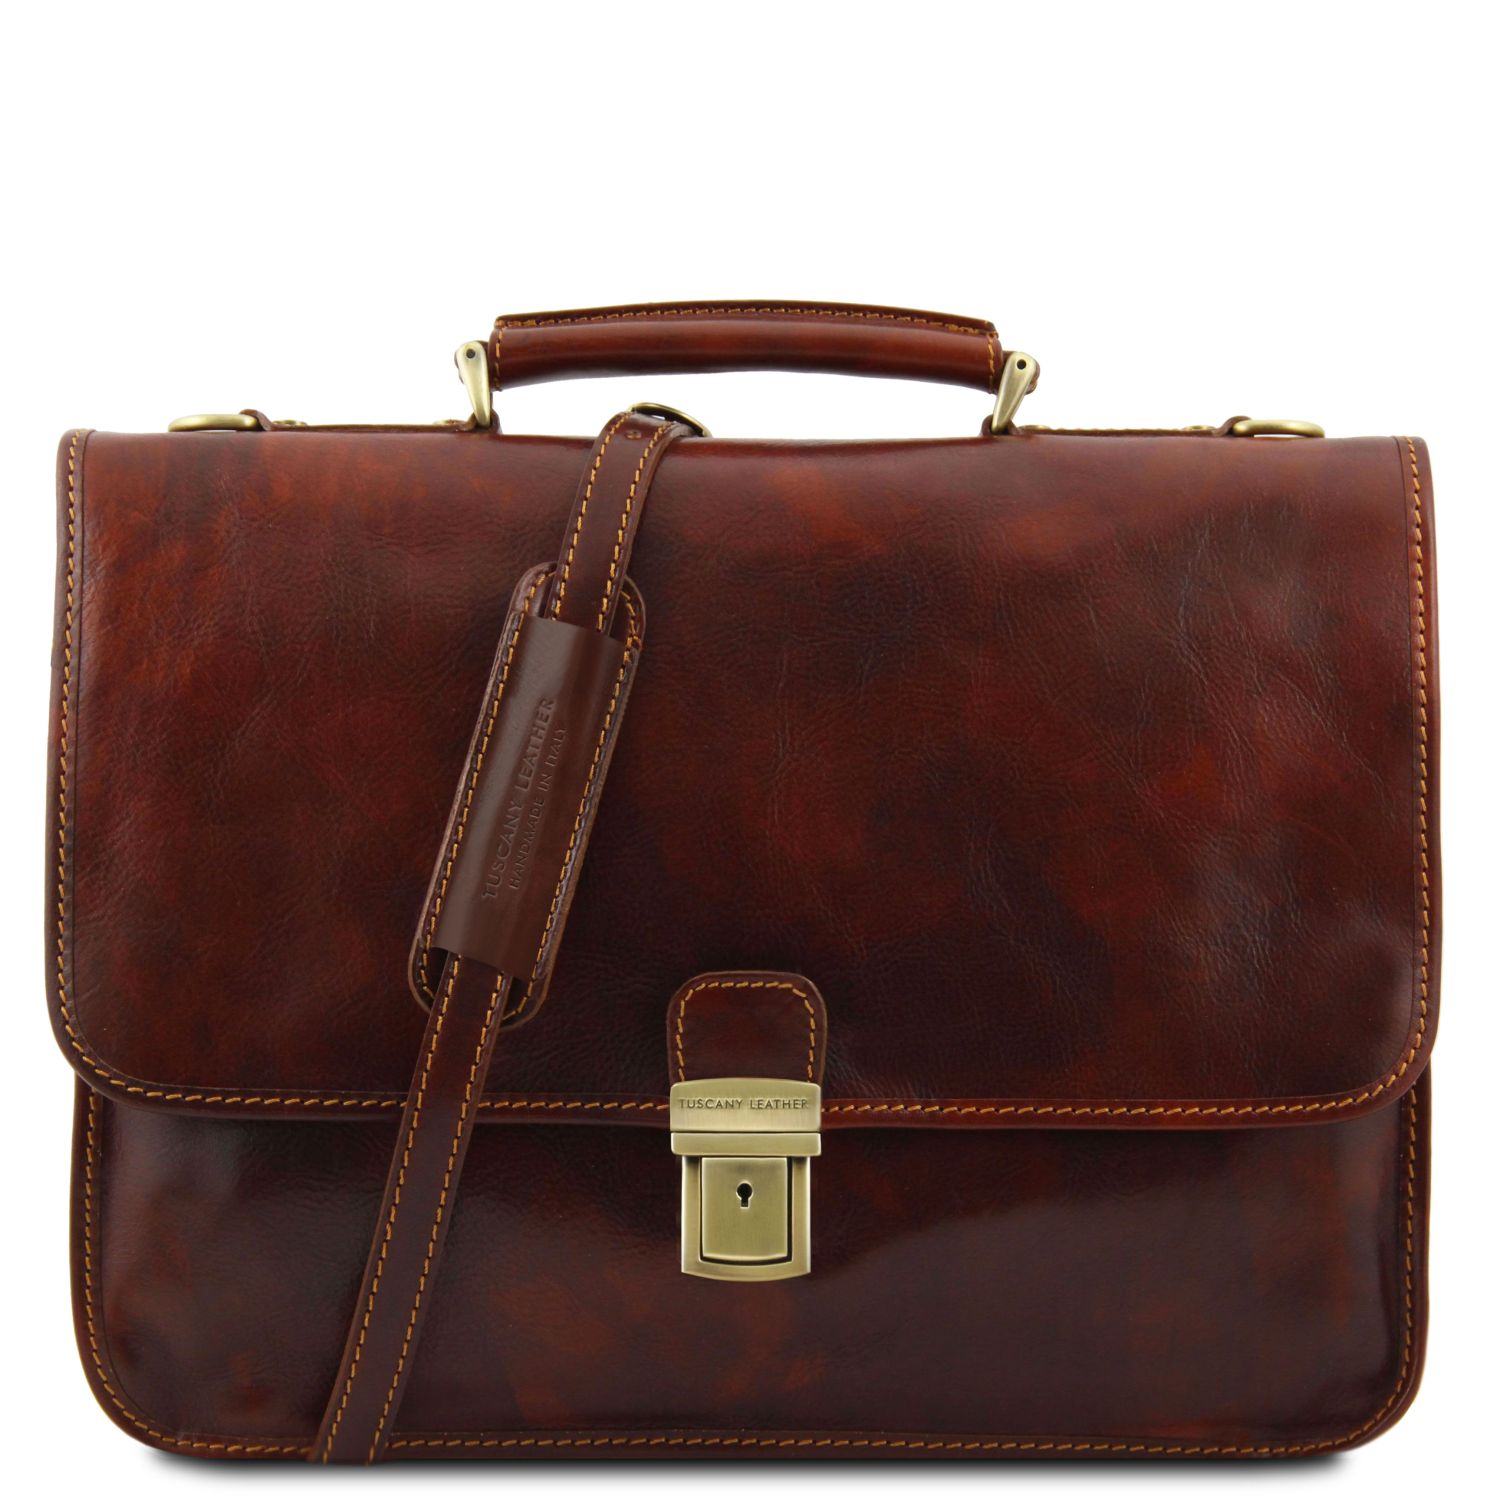 Leather travel bag business bag 'Ancona' leather brown vintage